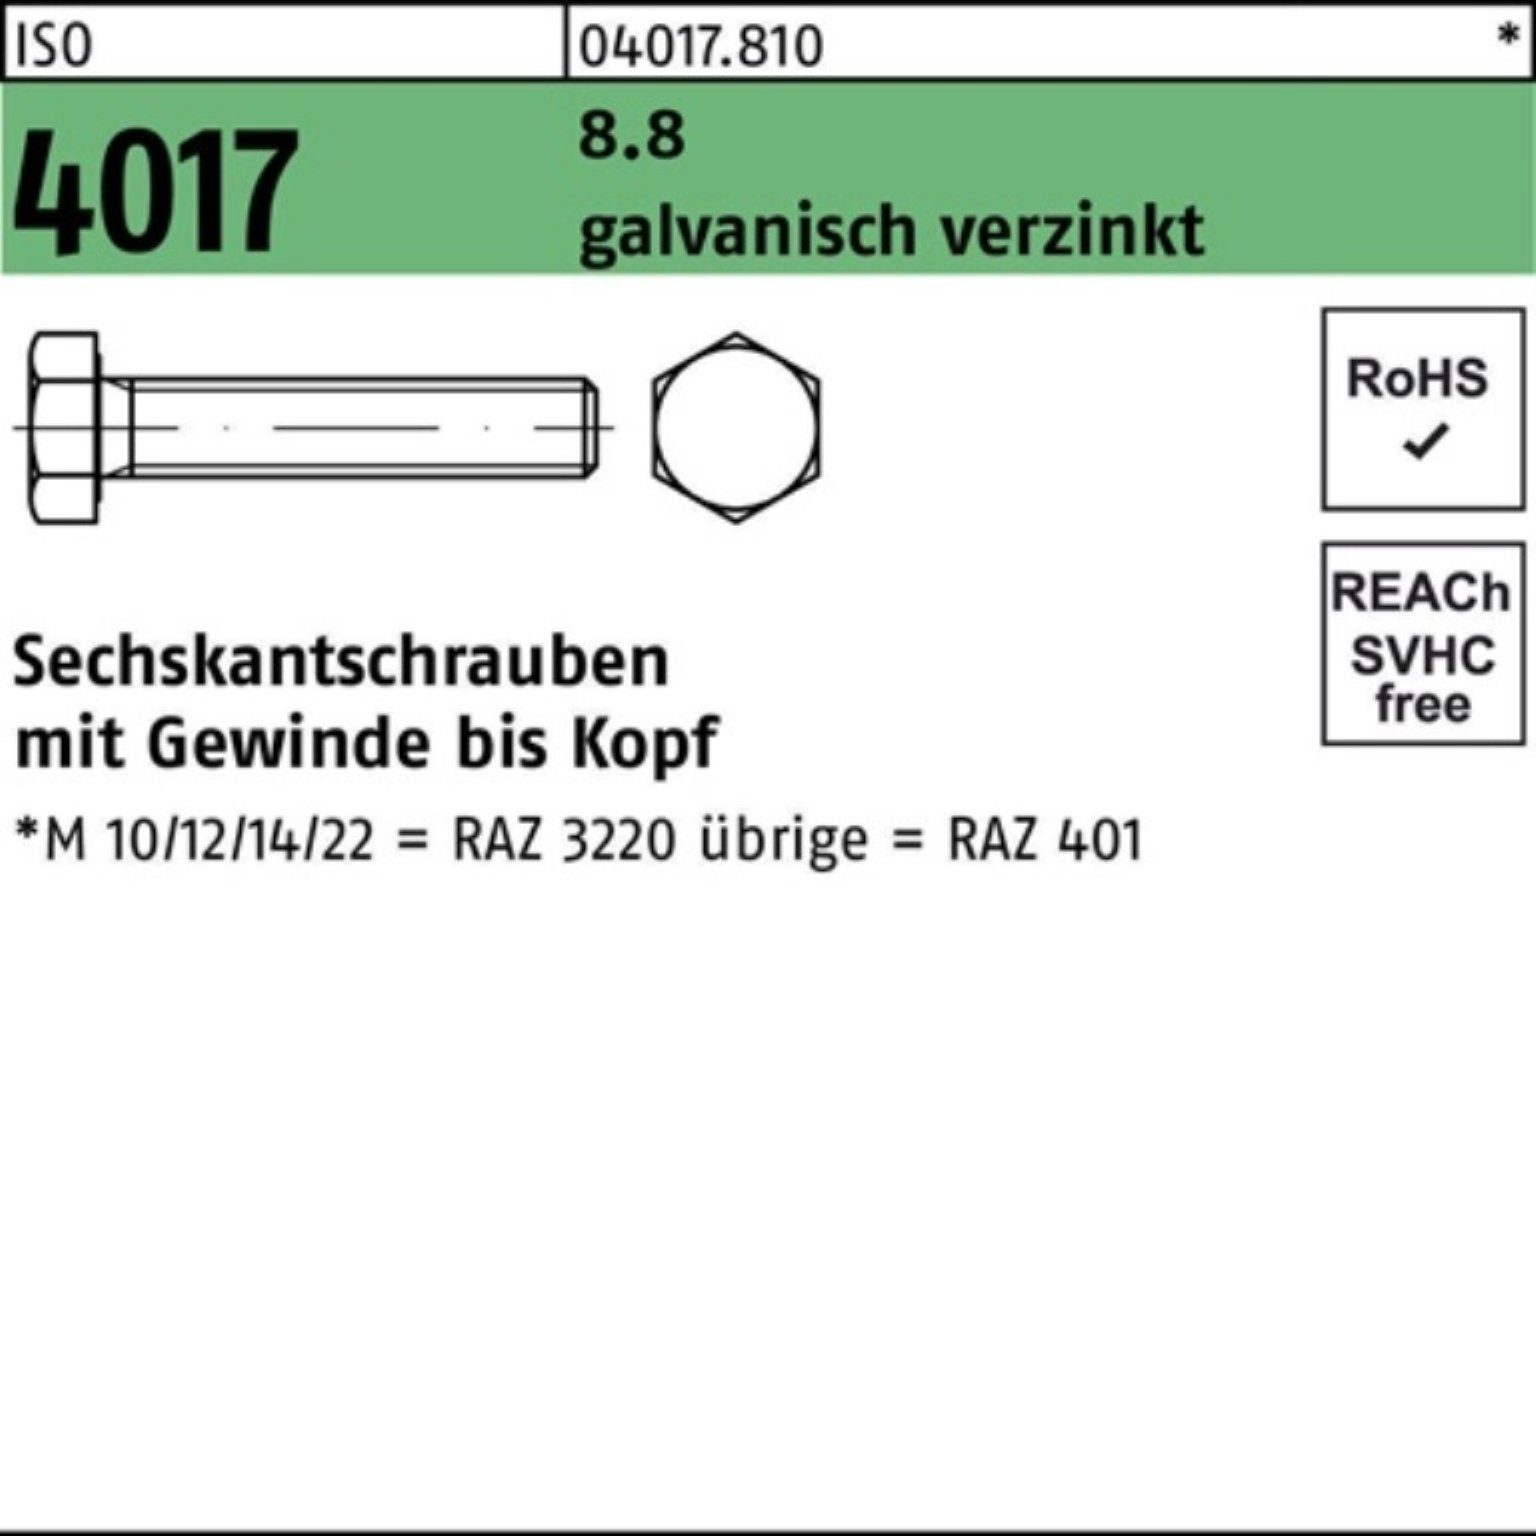 VG Sechskantschraube St ISO Sechskantschraube Pack 4017 8.8 galv.verz. Bufab 25 M18x 65 100er